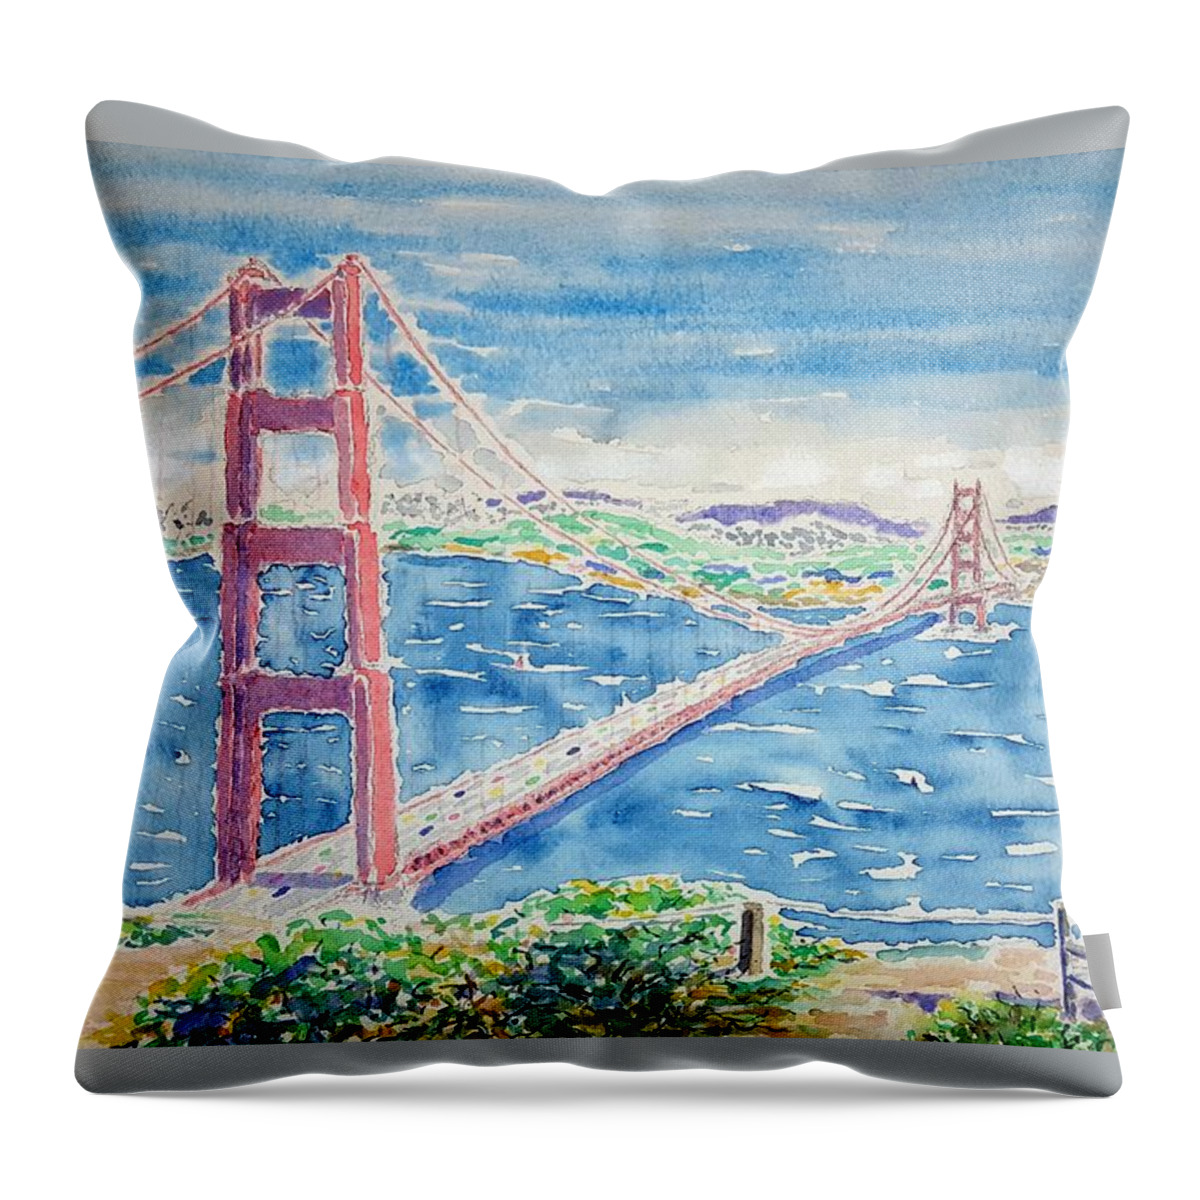 Watercolor Throw Pillow featuring the painting Golden Gate Vista by John Klobucher